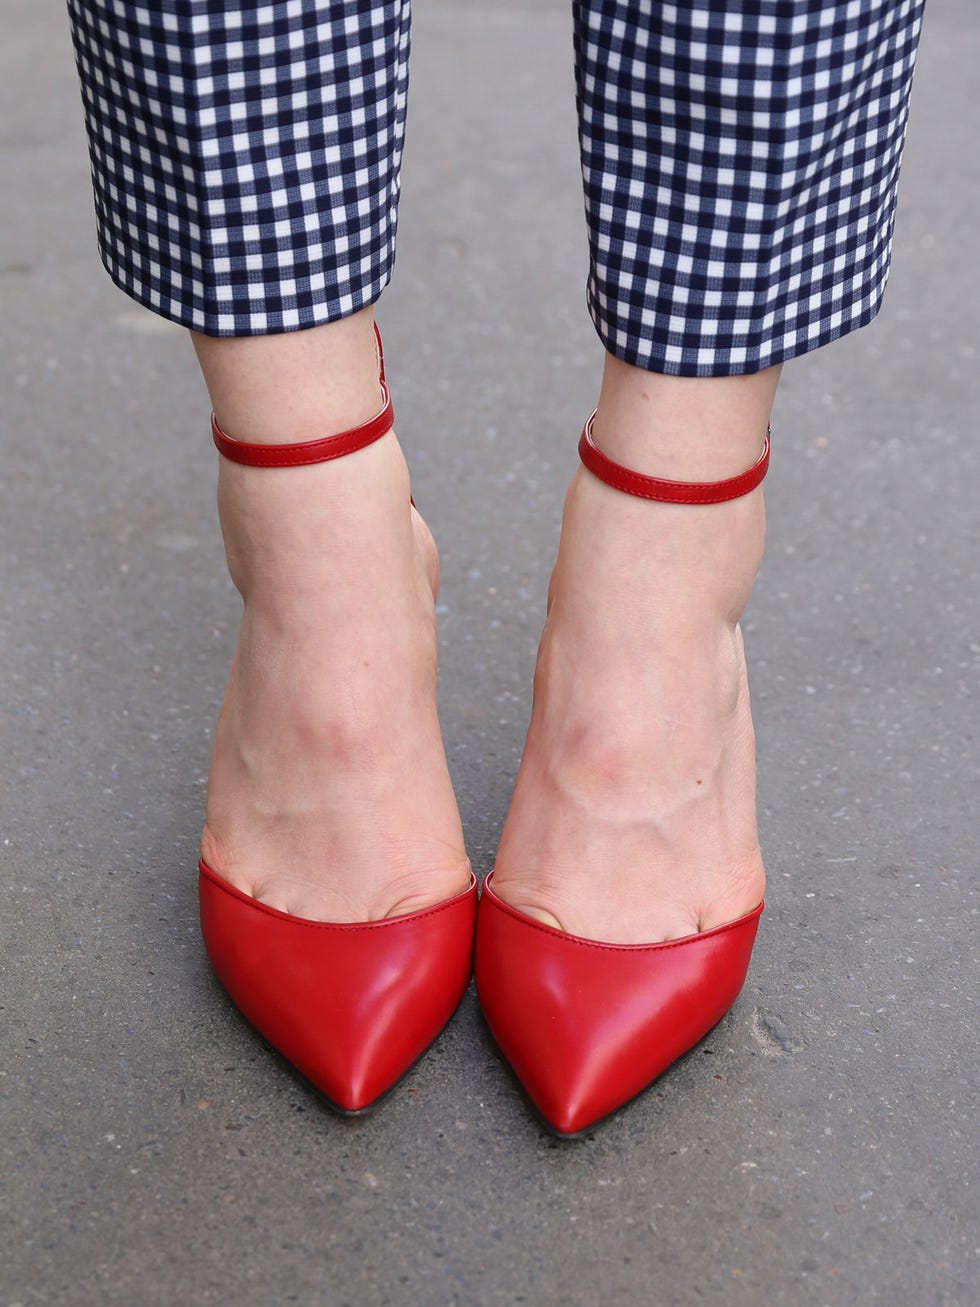 Footwear, Red, Shoe, High heels, Pattern, Ankle, Human leg, Leg, Design, Fashion, 